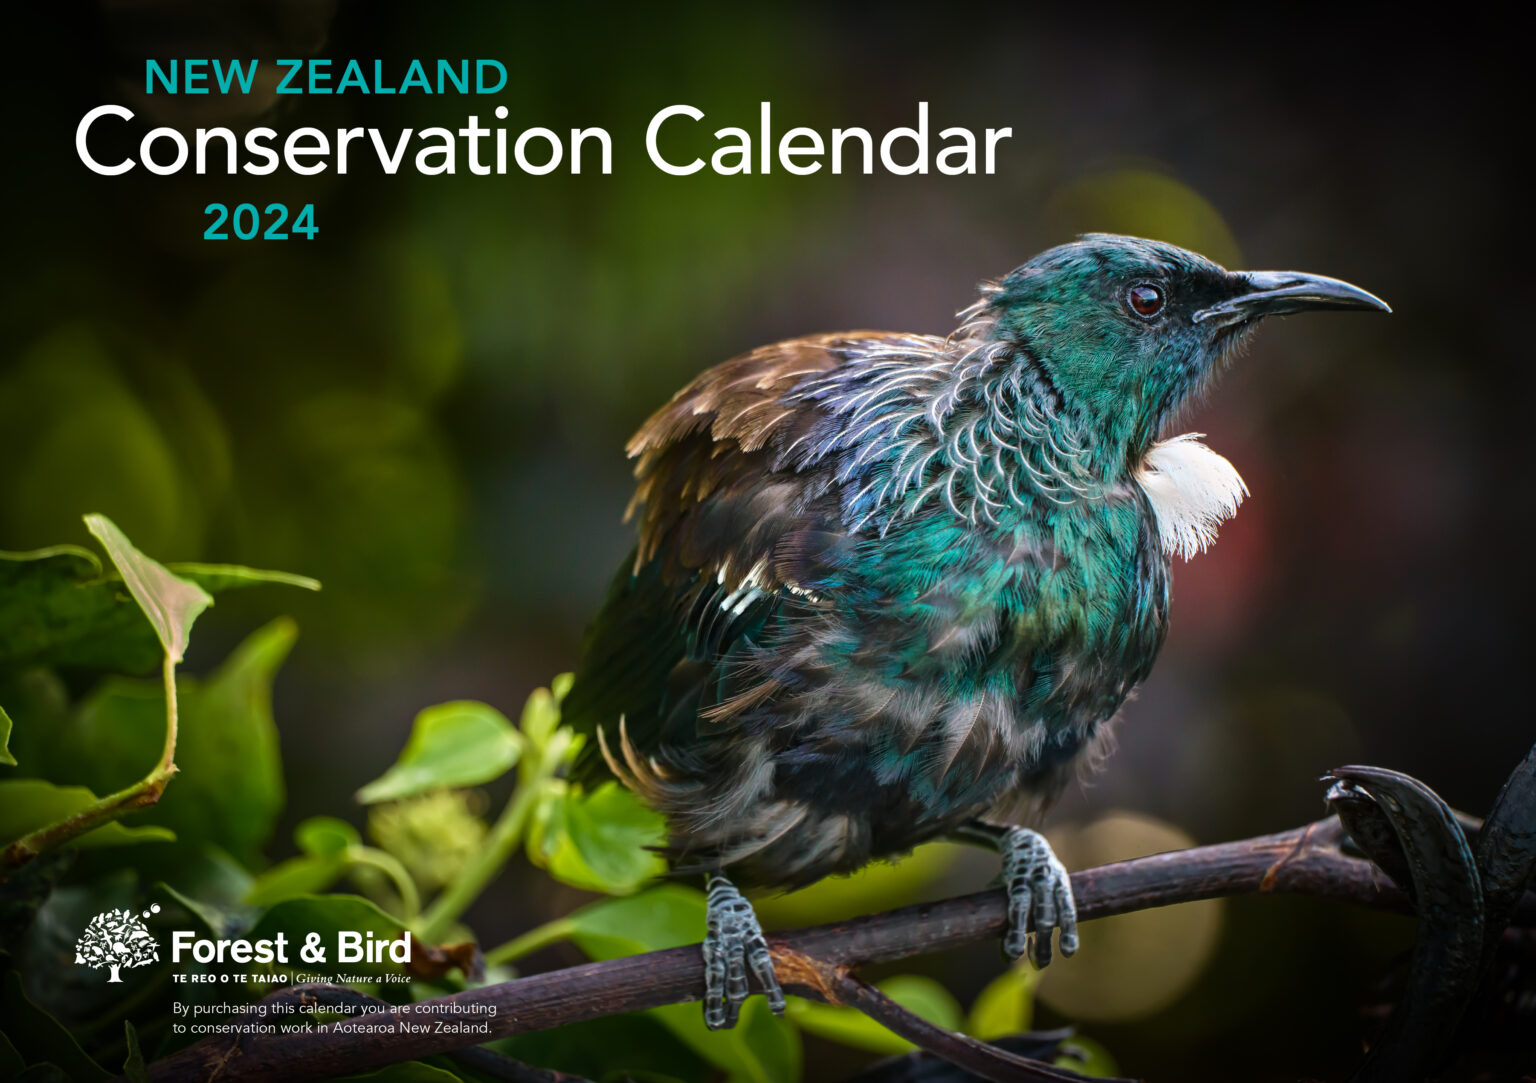 2024-new-zealand-conservation-calendar-potton-burton